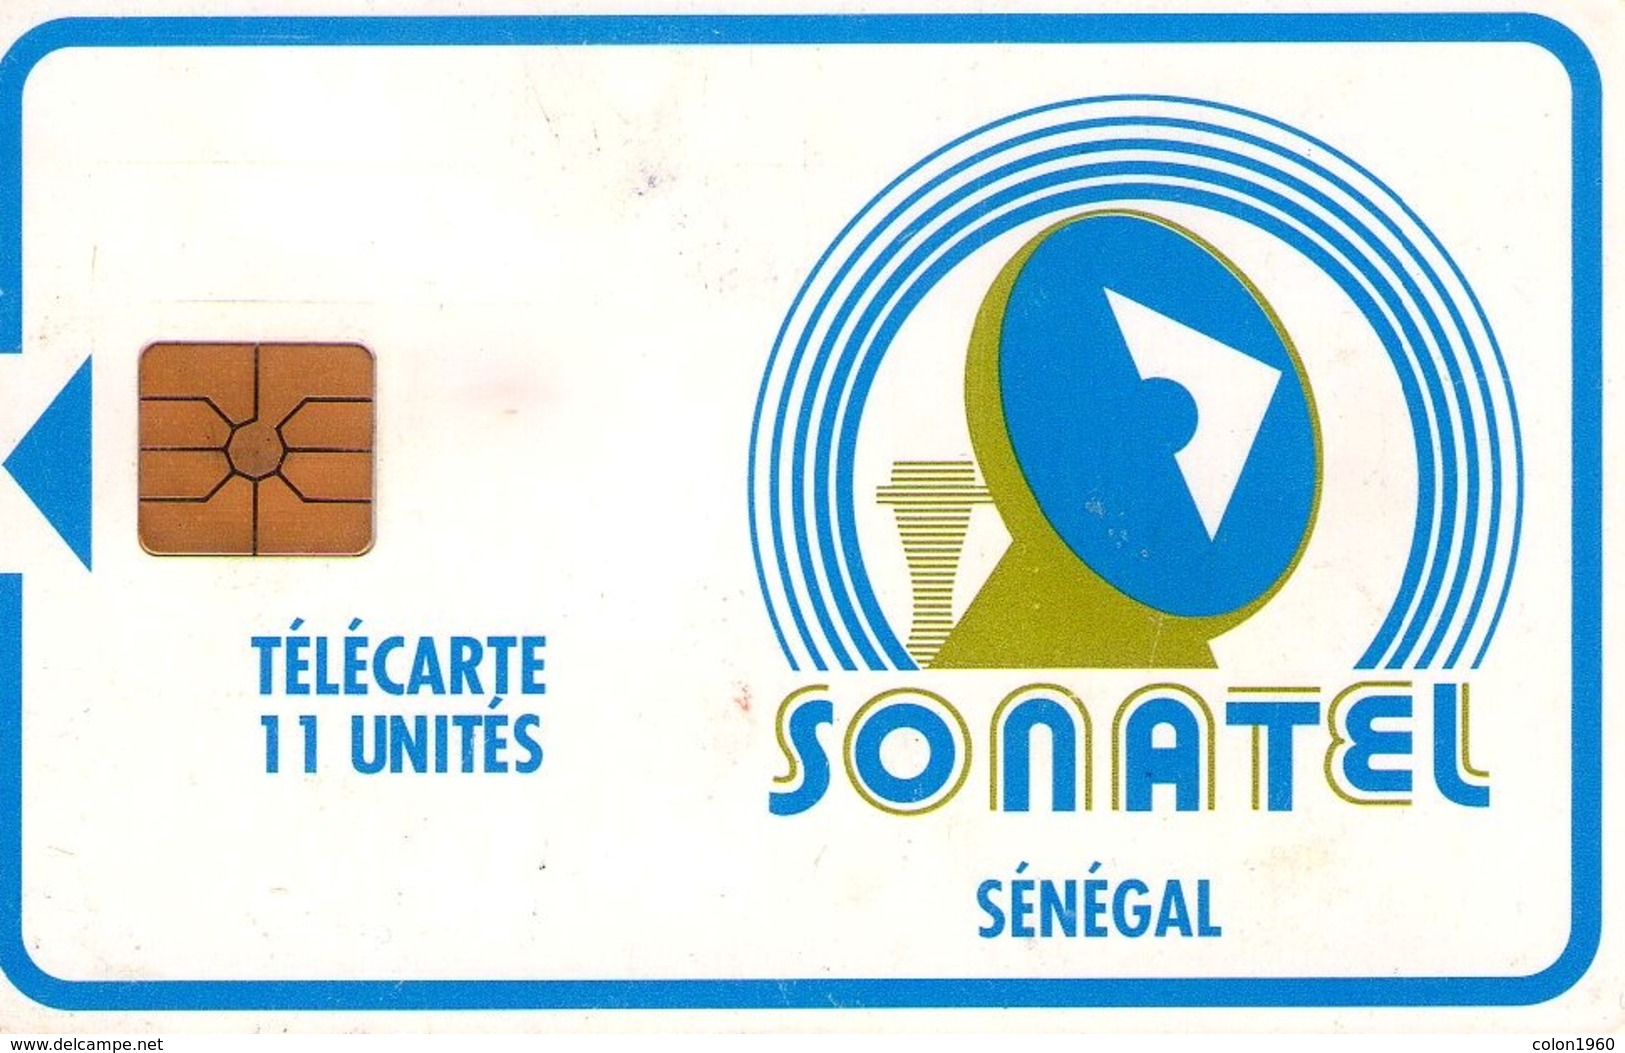 SENEGAL. SEN-16b. LOGO SONATEL (Gem1A - Transparent Moreno). 11 U. (001) - Senegal